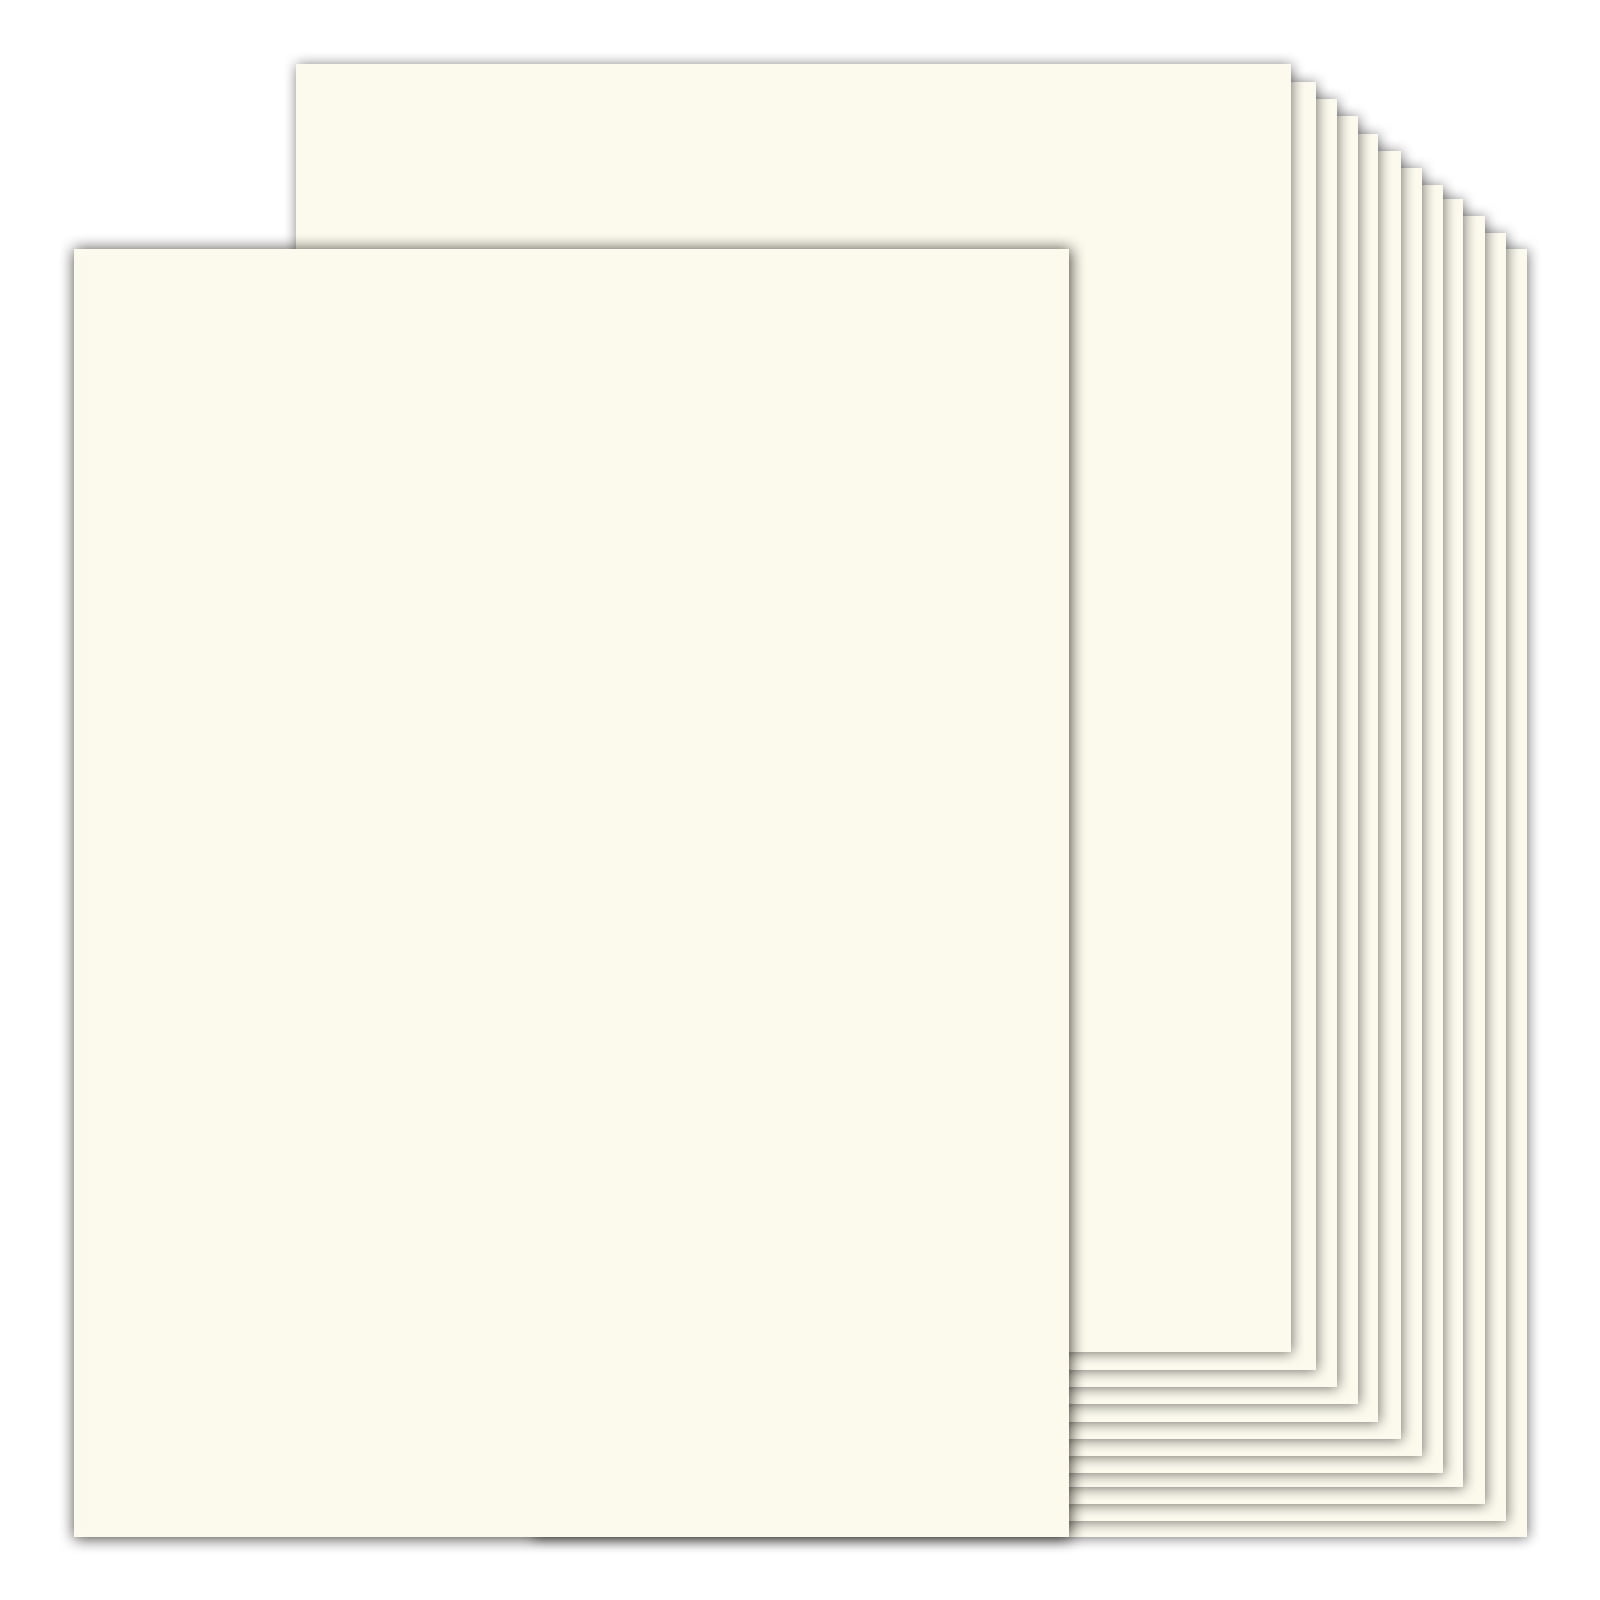 Staples Card Stock, 8.5 x 11, White - 250 pack